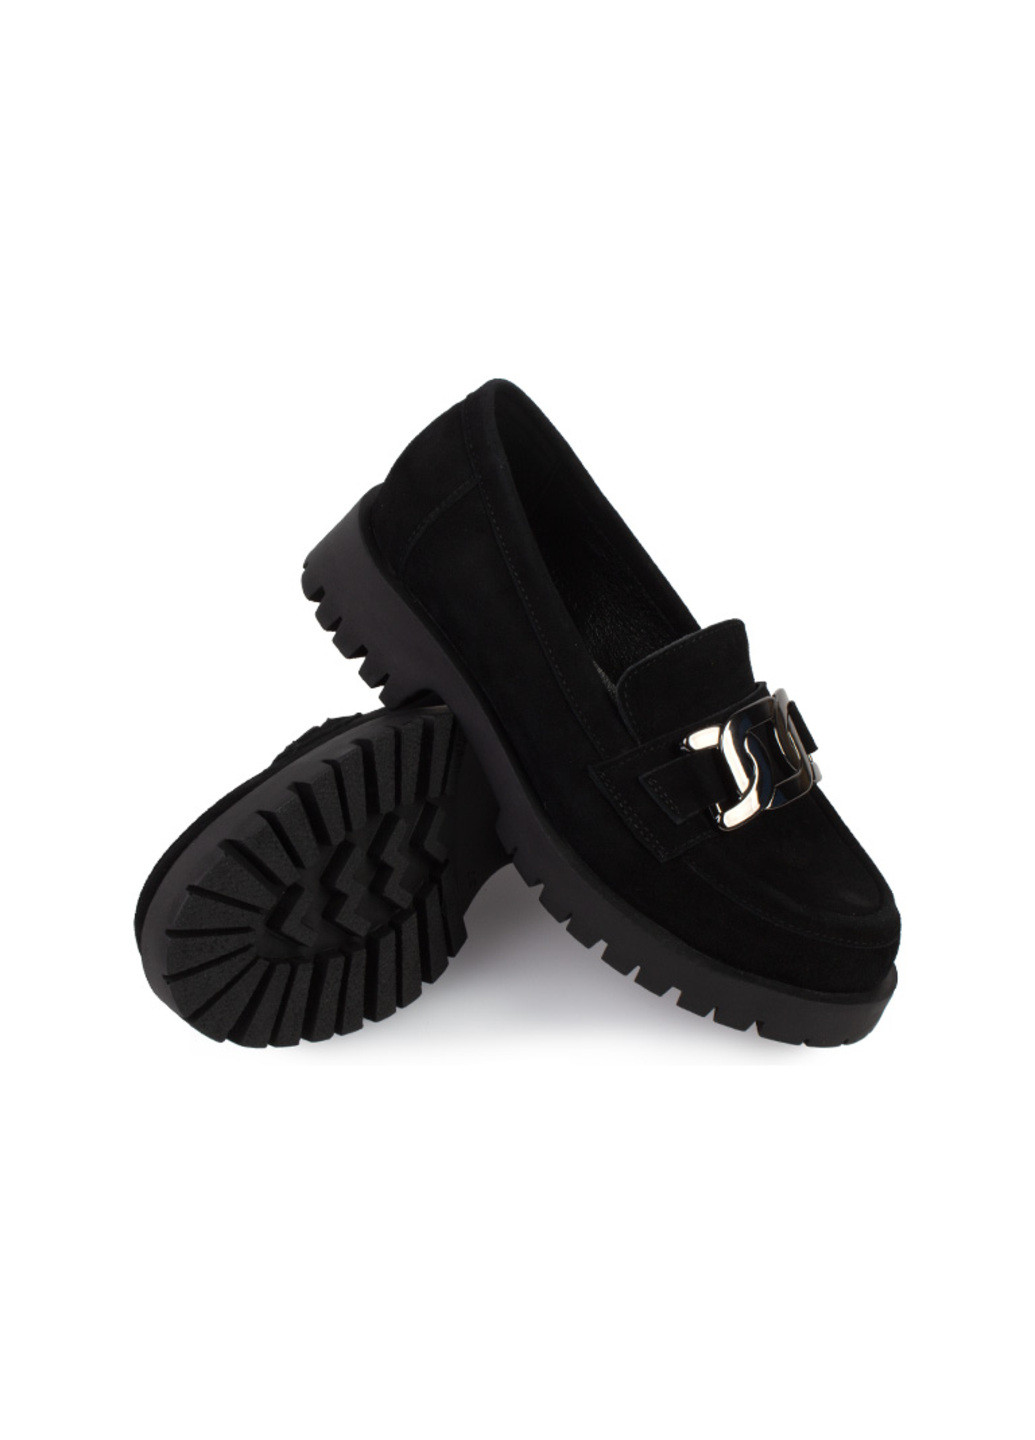 Туфли лоферы женские бренда 8200360_(3) Vittorio Pritti на среднем каблуке